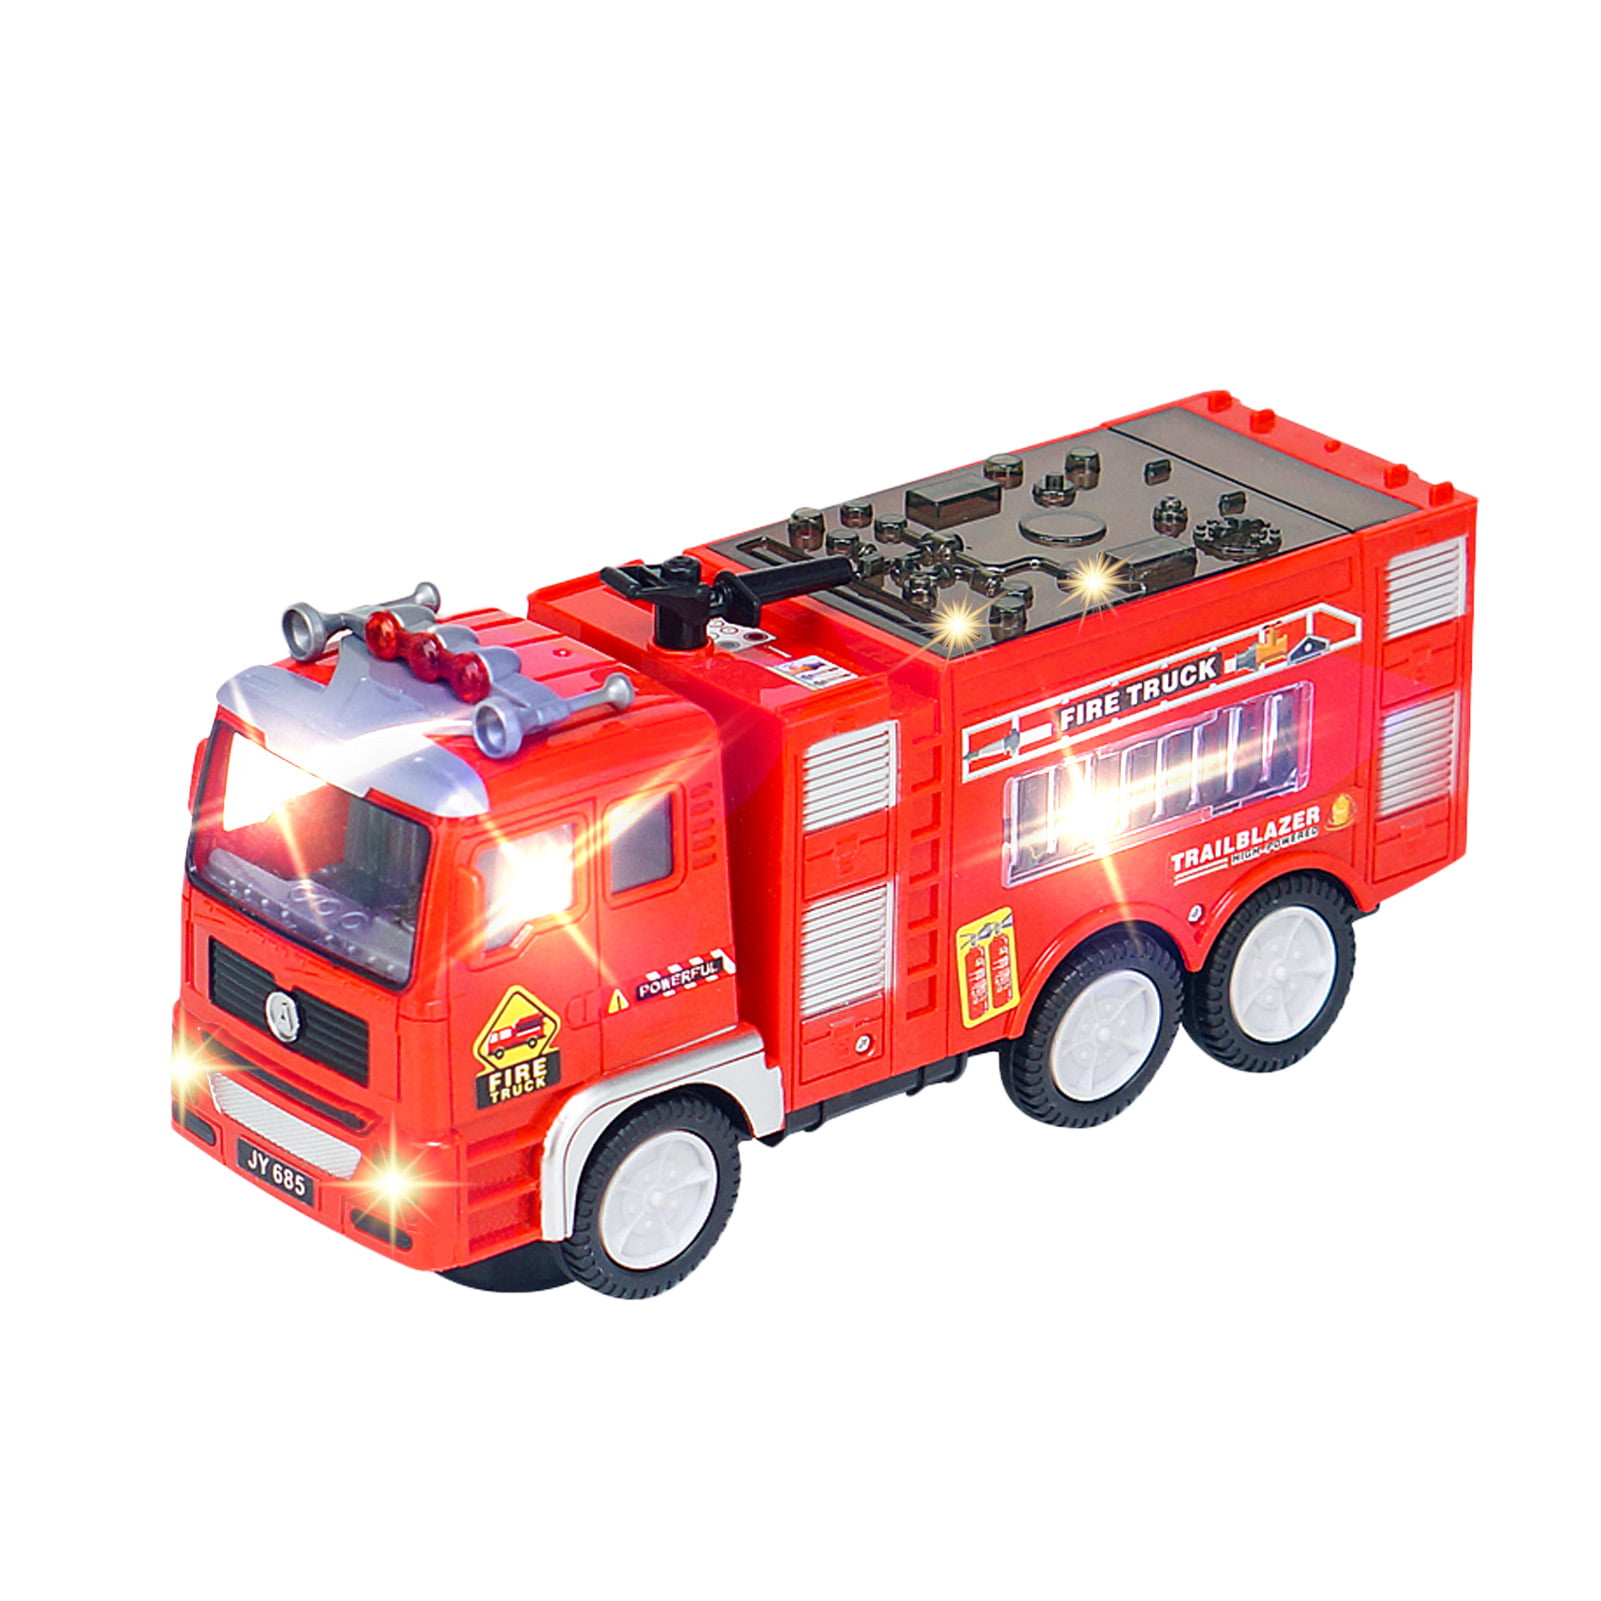 Teamsterz Fire Engine Lights & Siren Sounds & Ladder kids Diecast Toy 37cm Long 